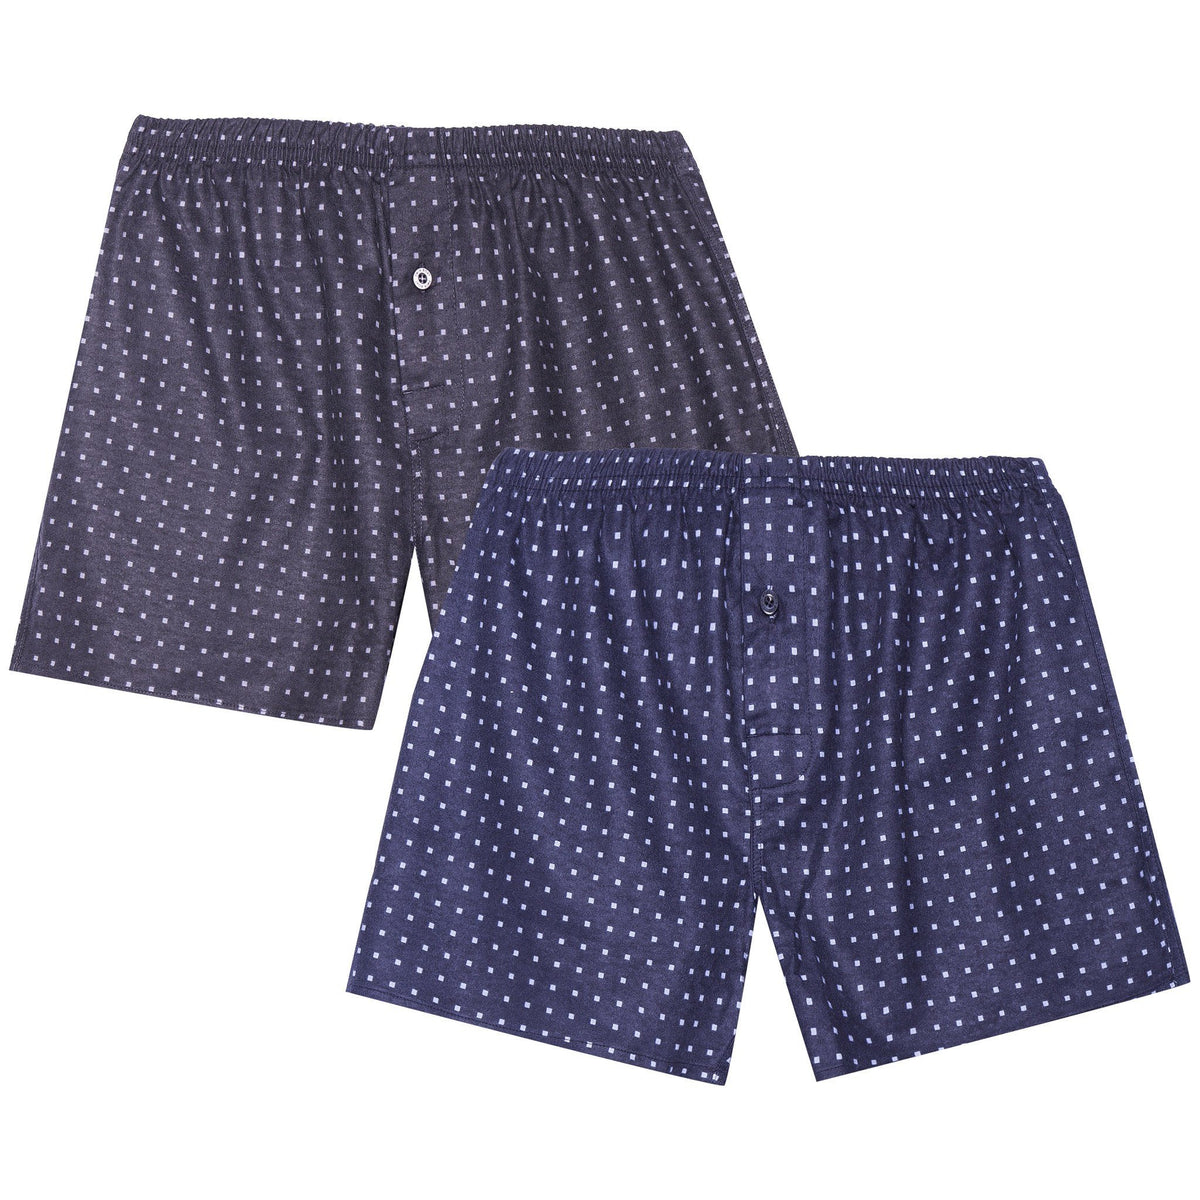 Men's 100% Cotton Flannel Boxers - 2 Pack - Floating Squares Blue/Grey